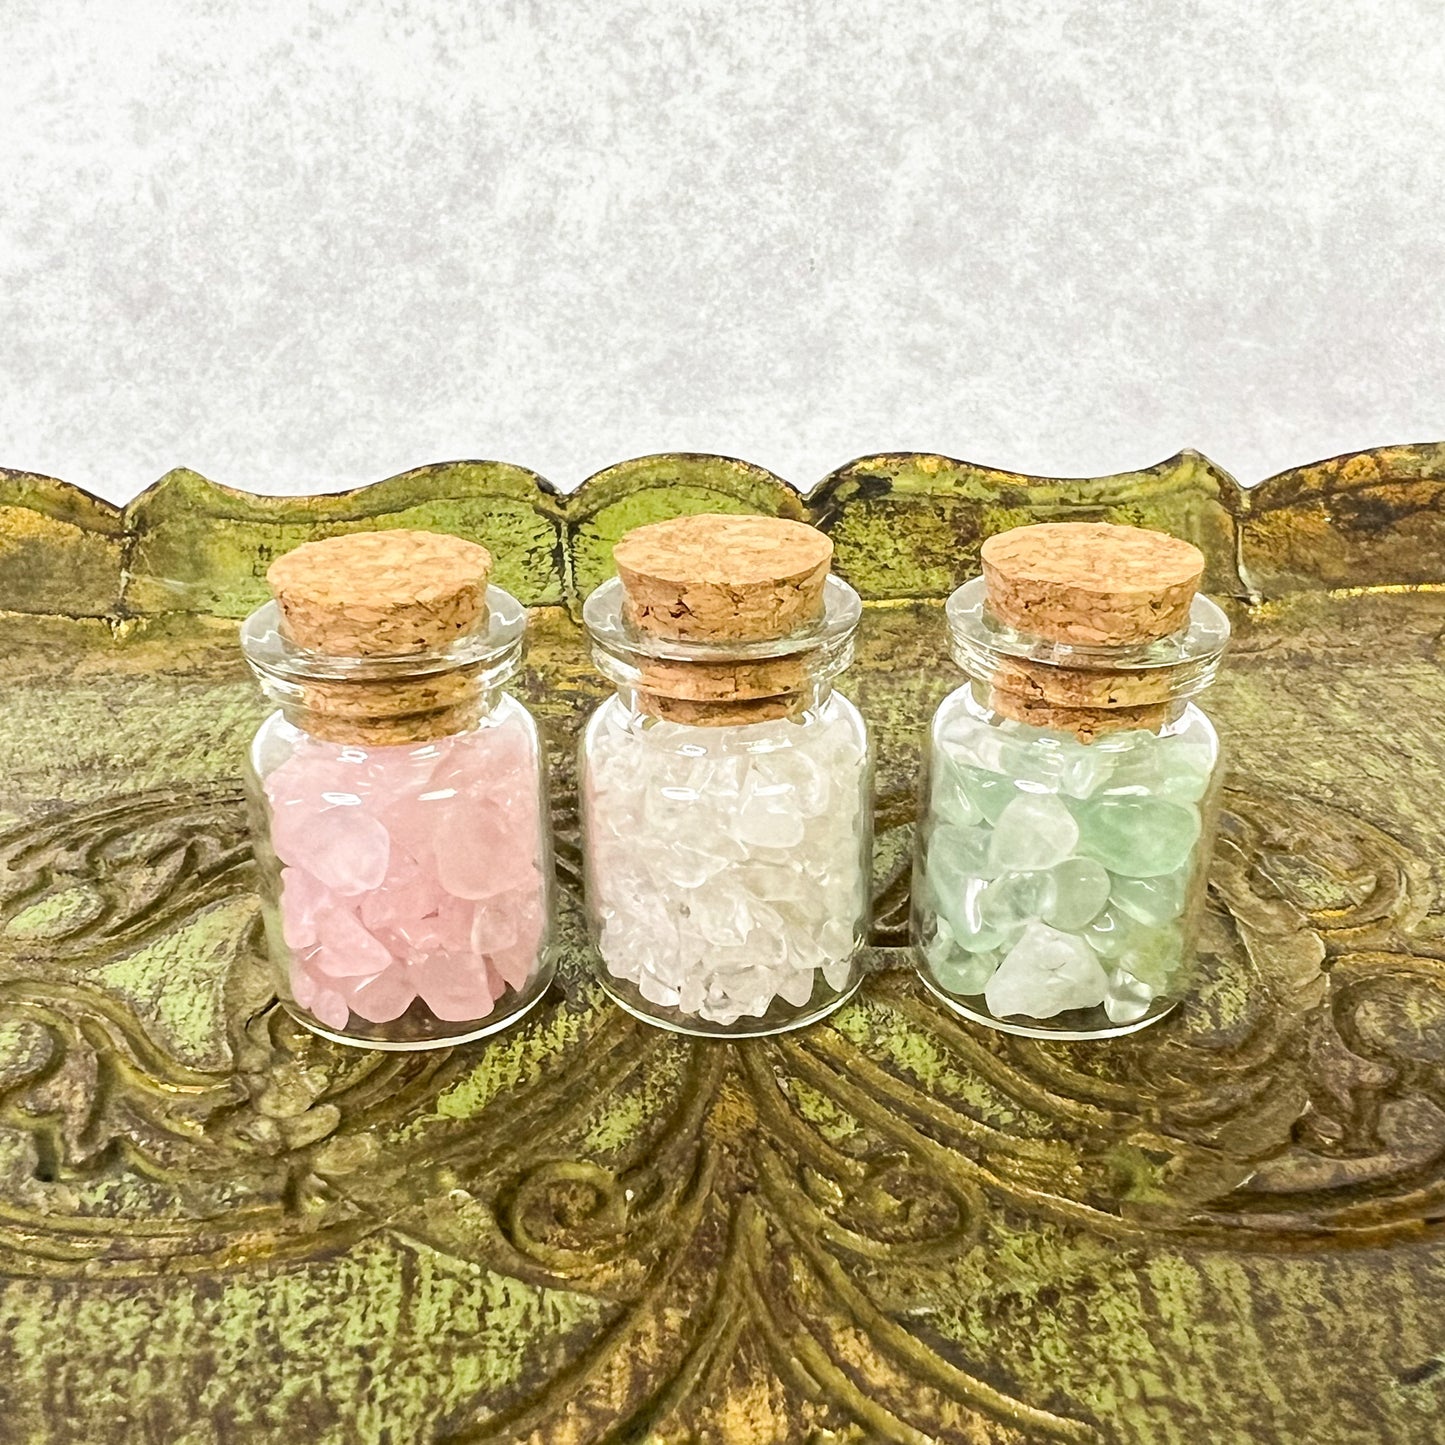 Spring Crystal Wish Jar Trio - Wishing Jars - Rose Quartz, Clear Quartz & Green Fluorite